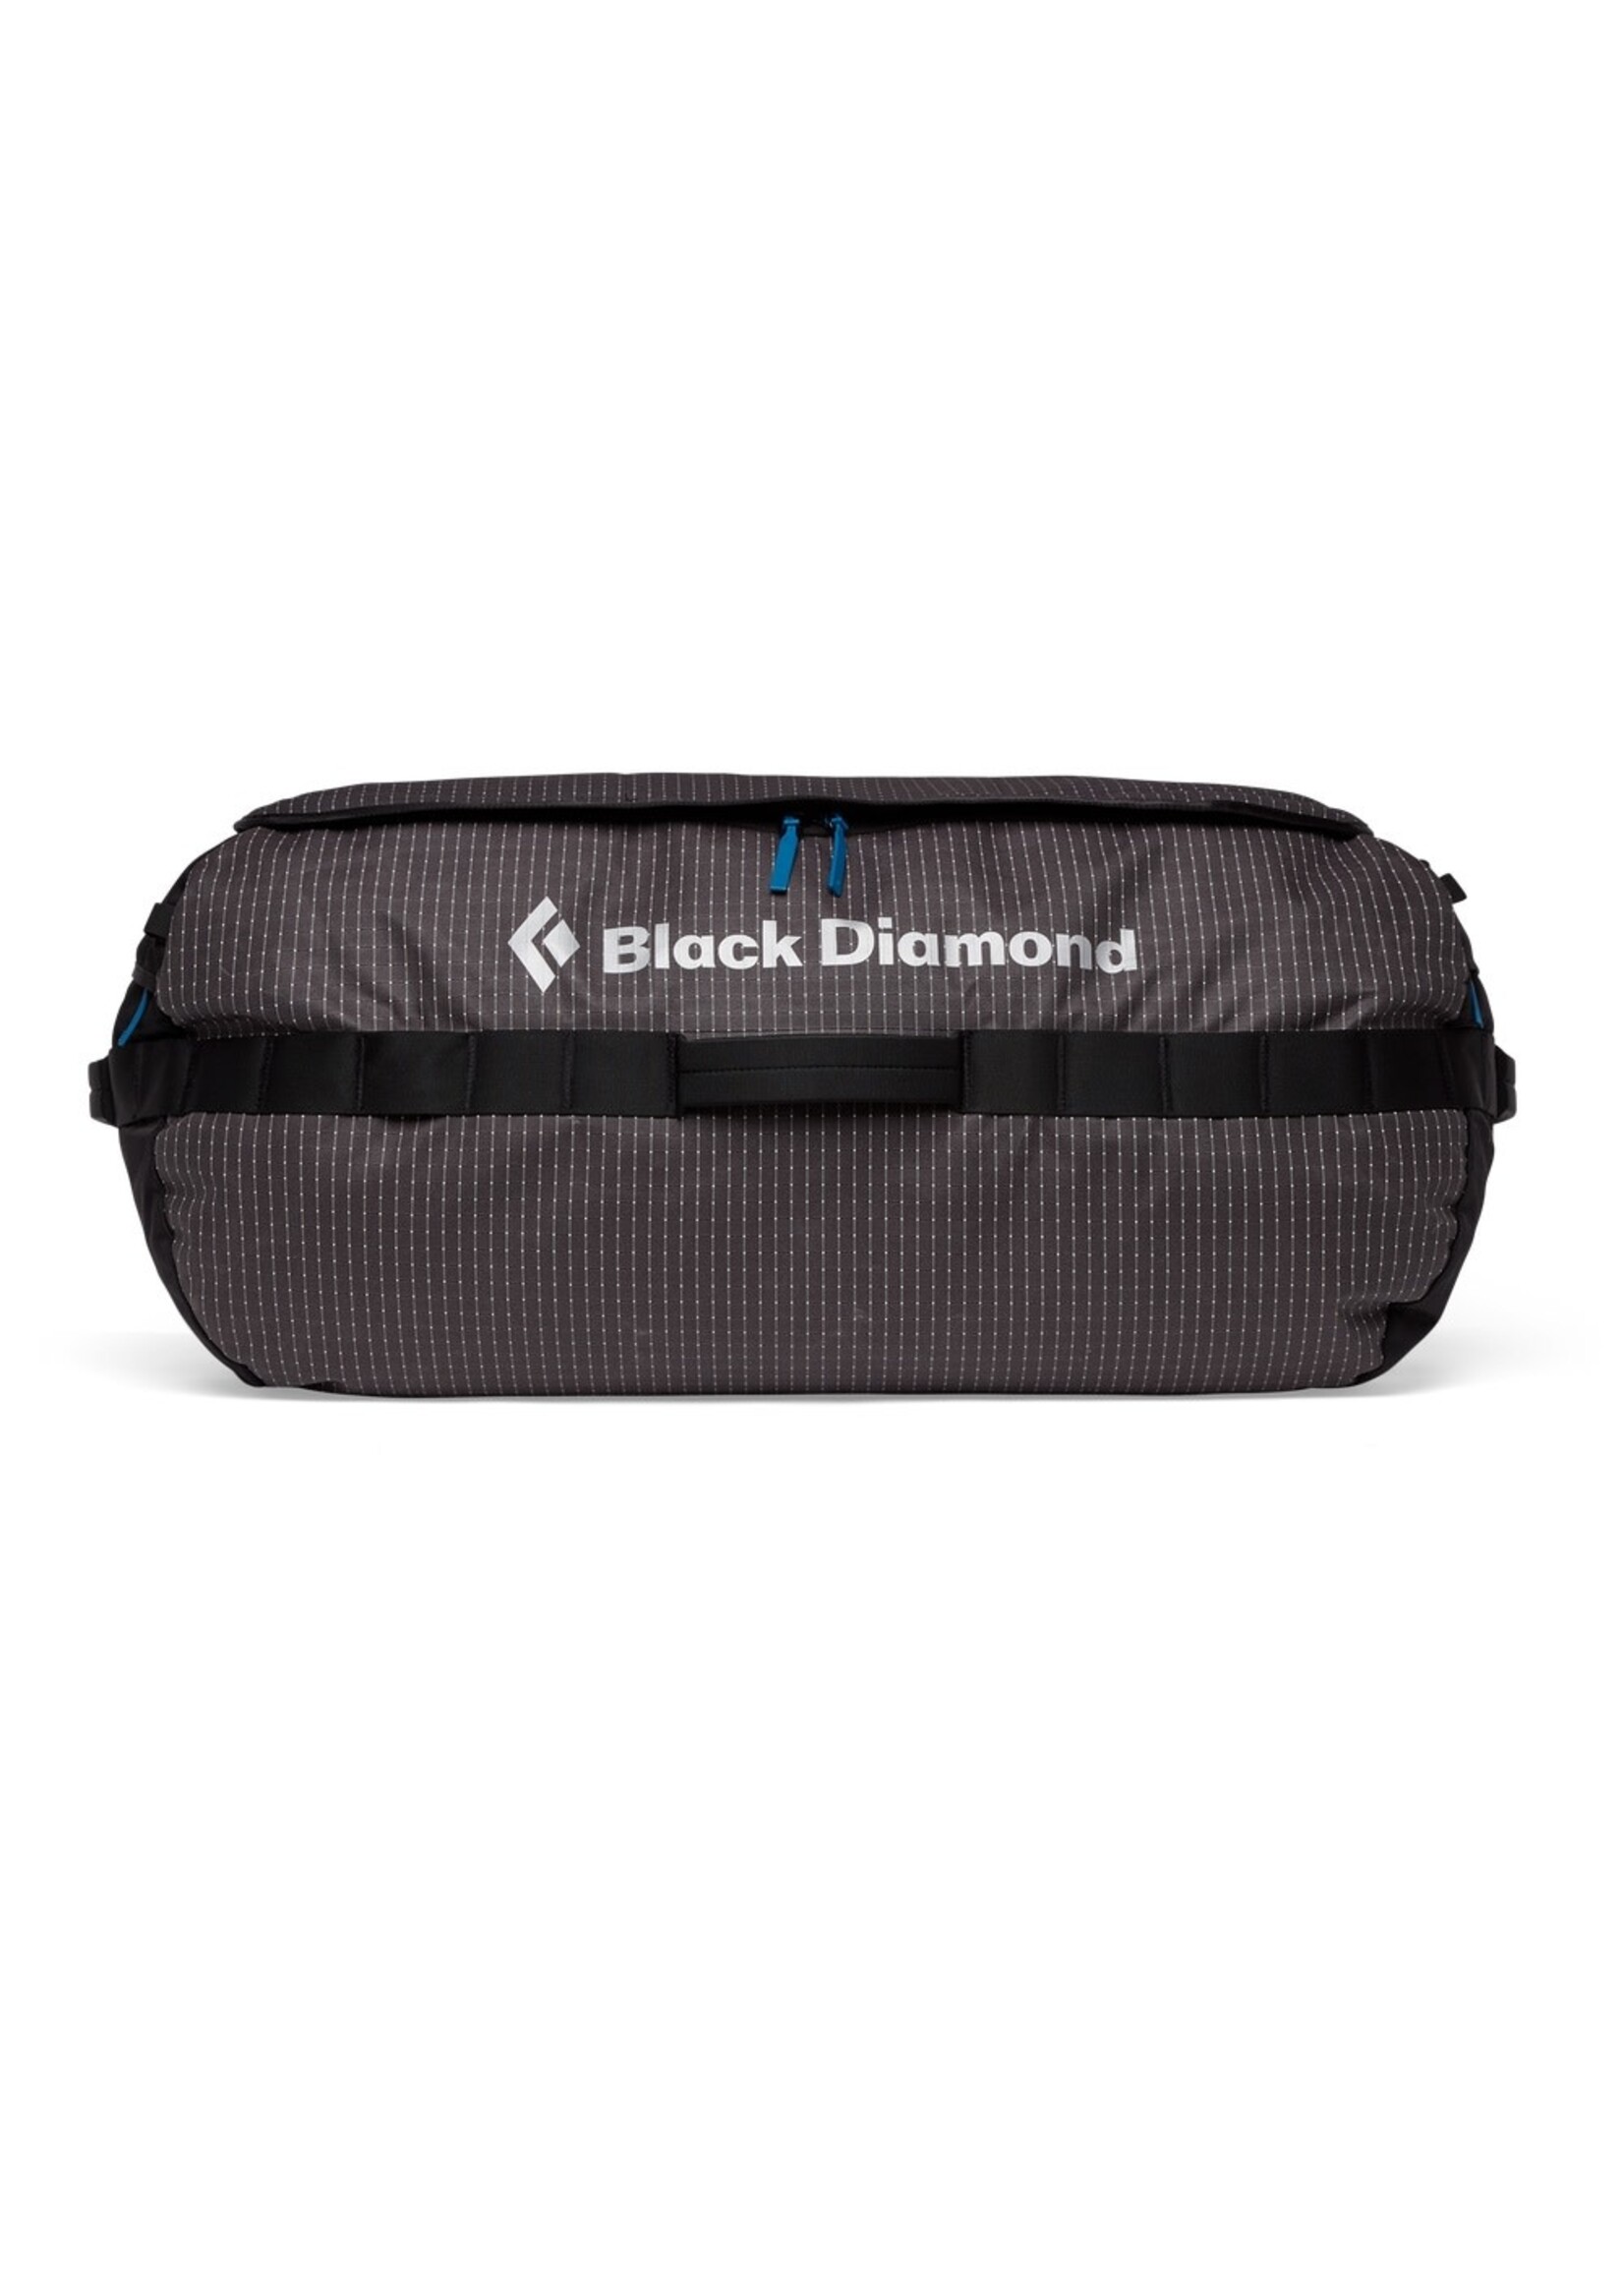 Black Diamond Black Diamond Stonehauler 120 L Duffel Bag